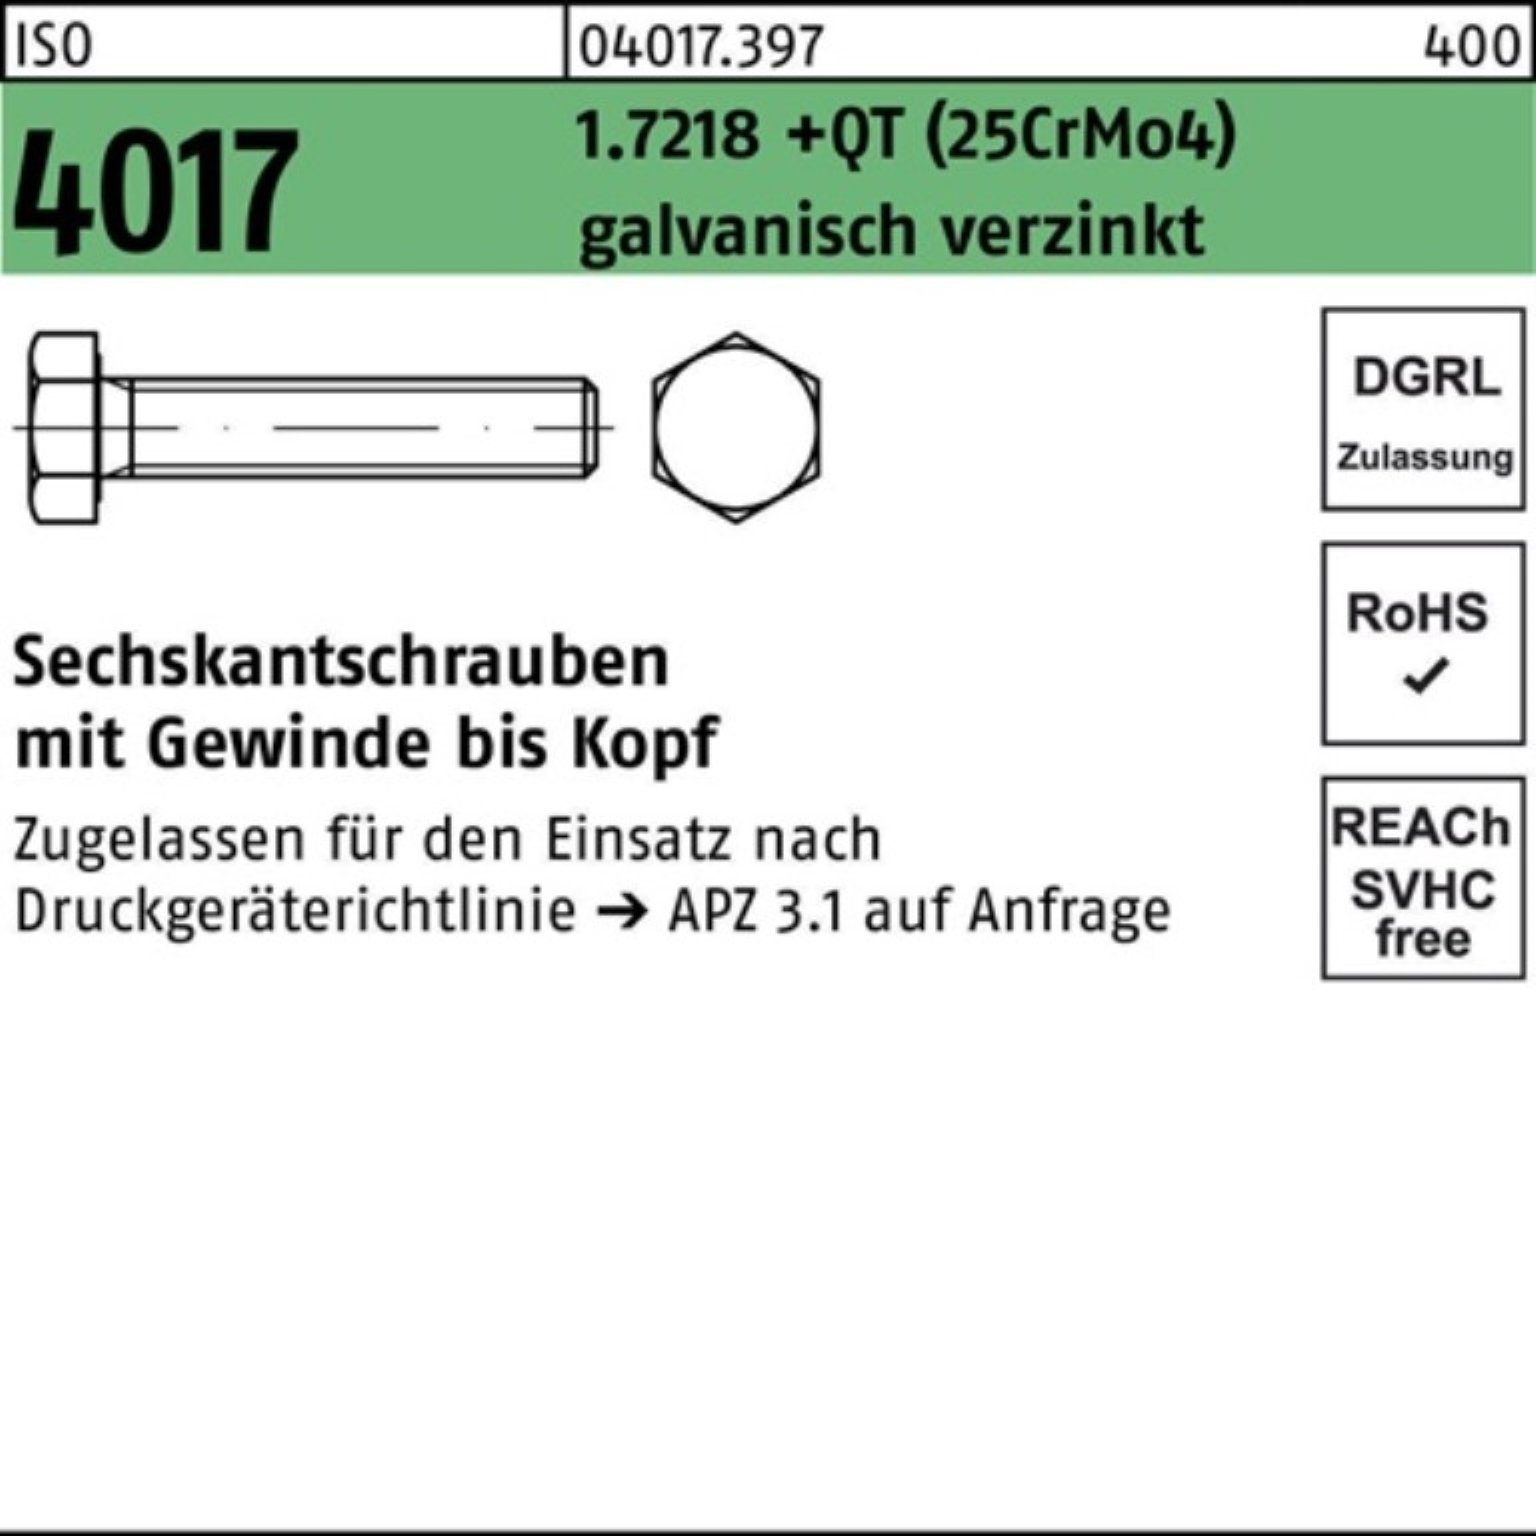 g +QT Sechskantschraube Pack (25CrMo4) M12x35 Bufab VG 4017 1.7218 Sechskantschraube ISO 100er